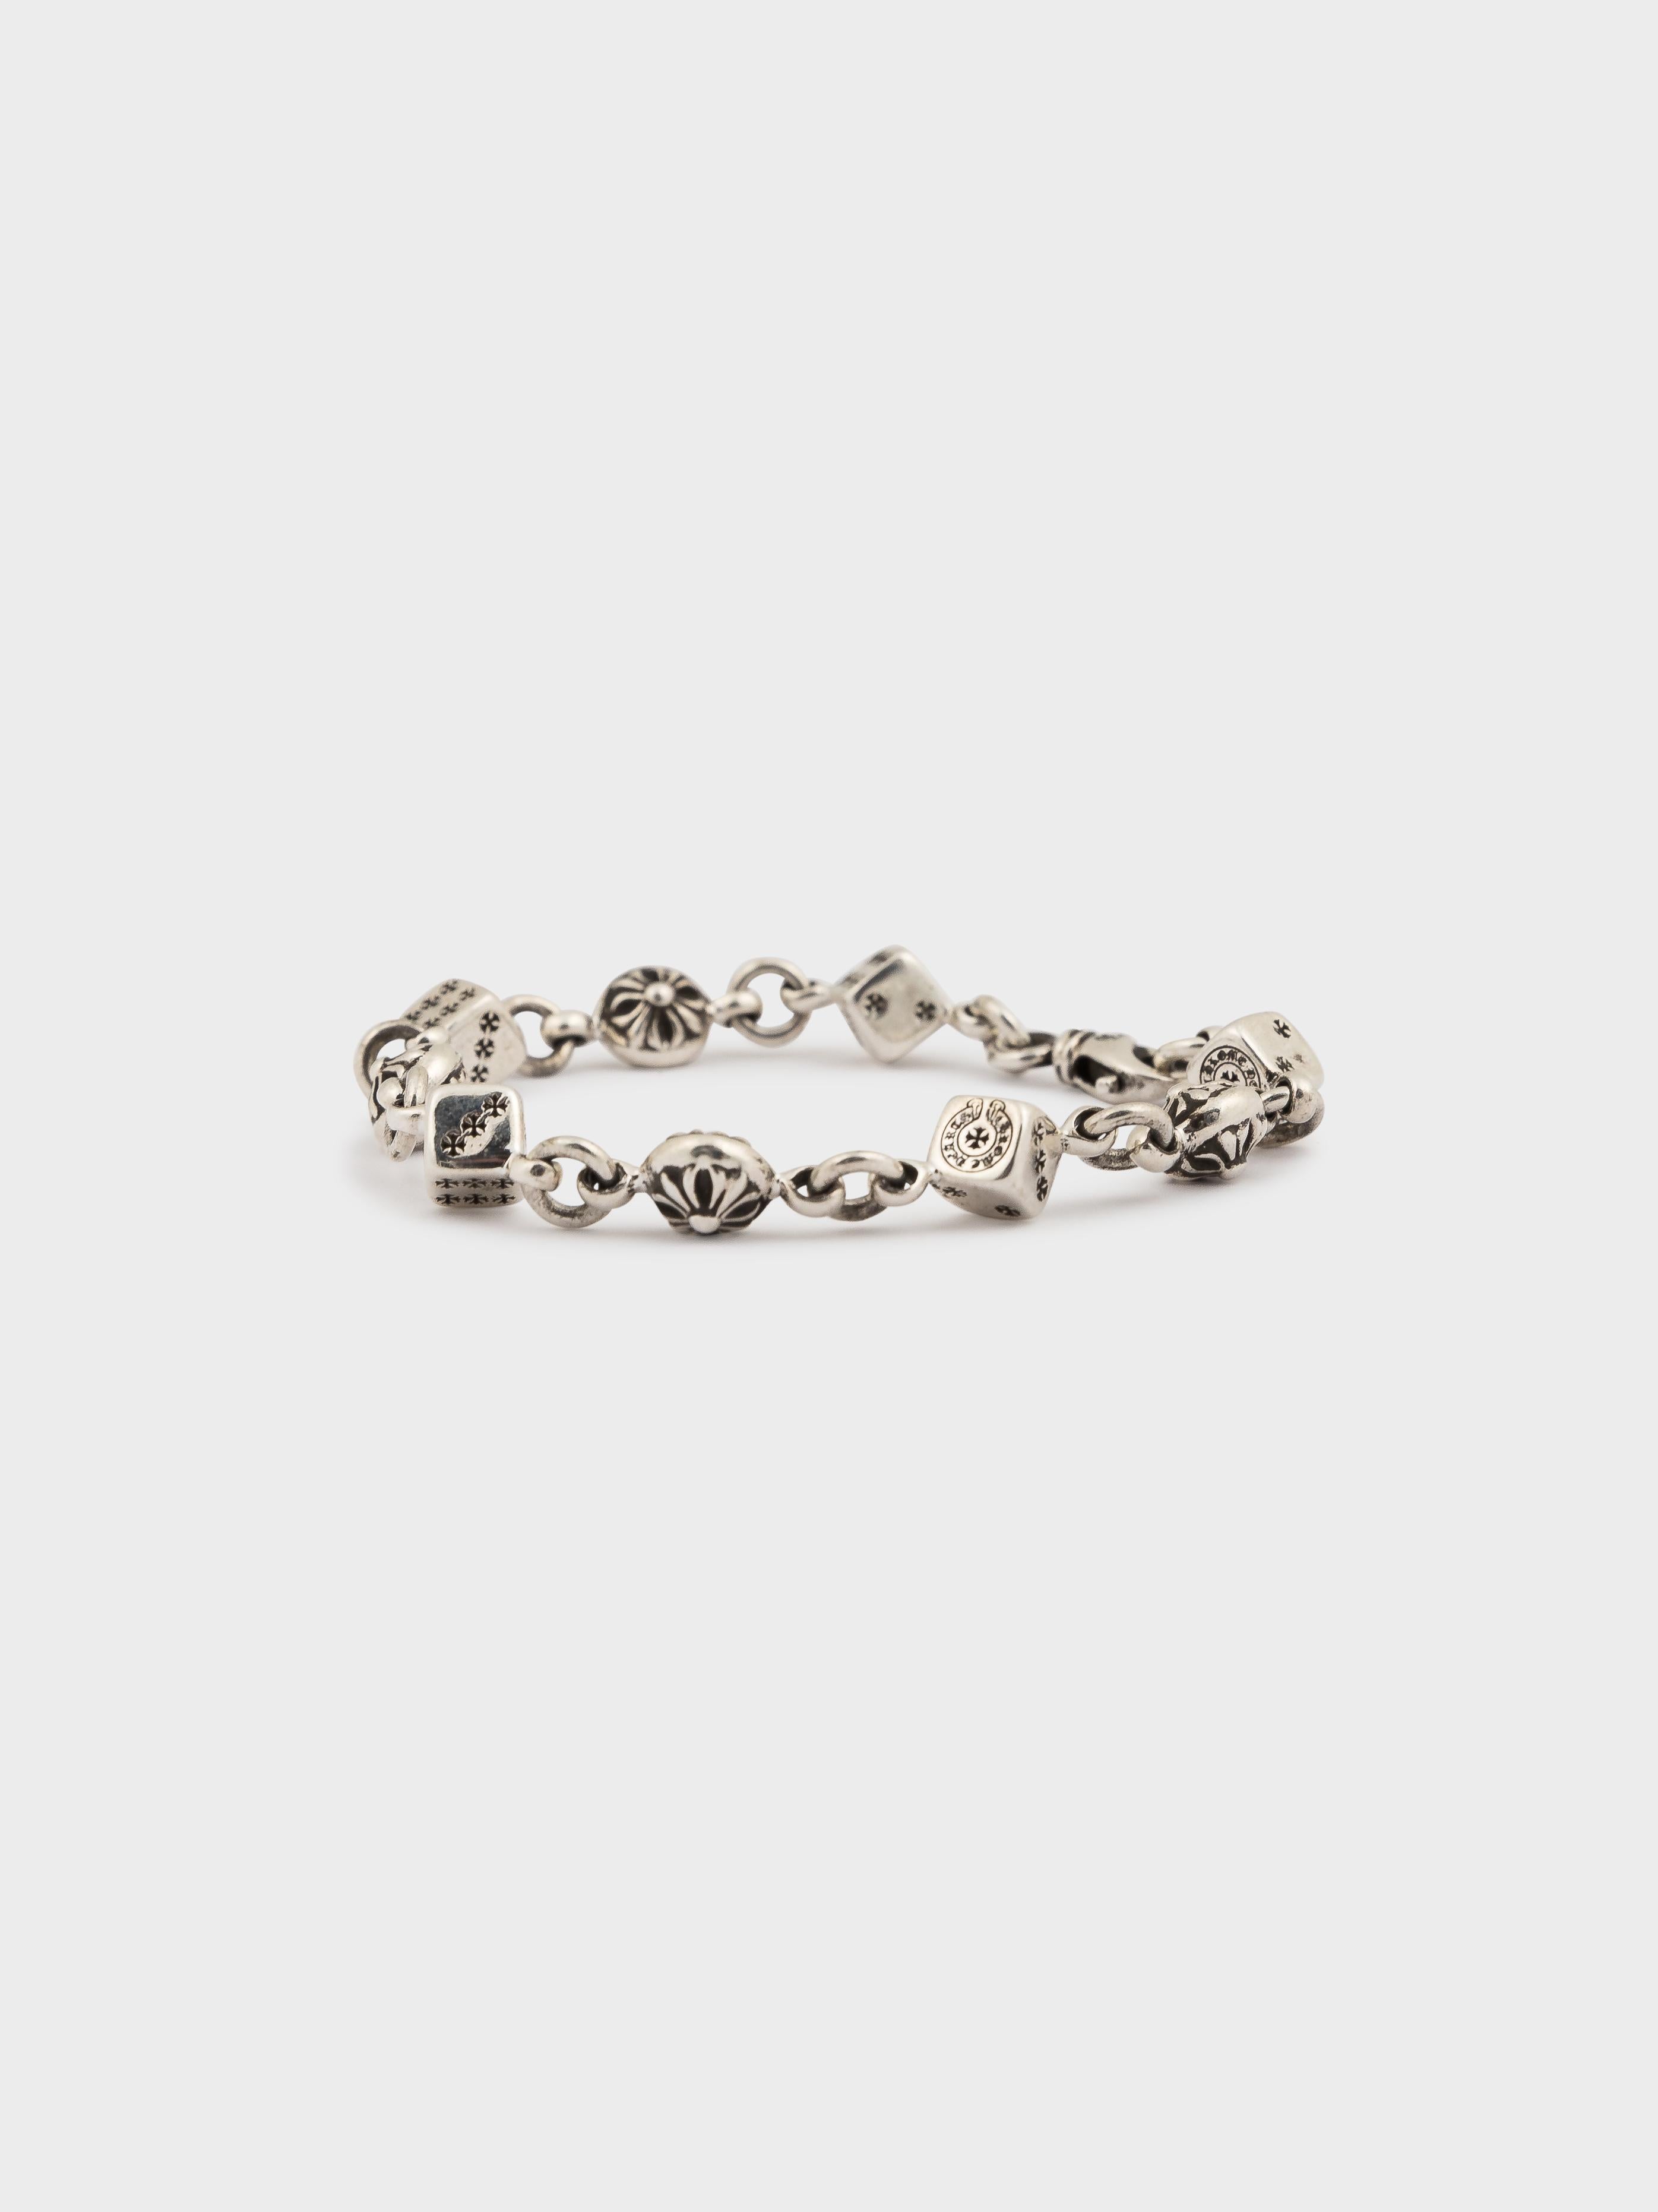 chrome hearts dice bracelet retail price